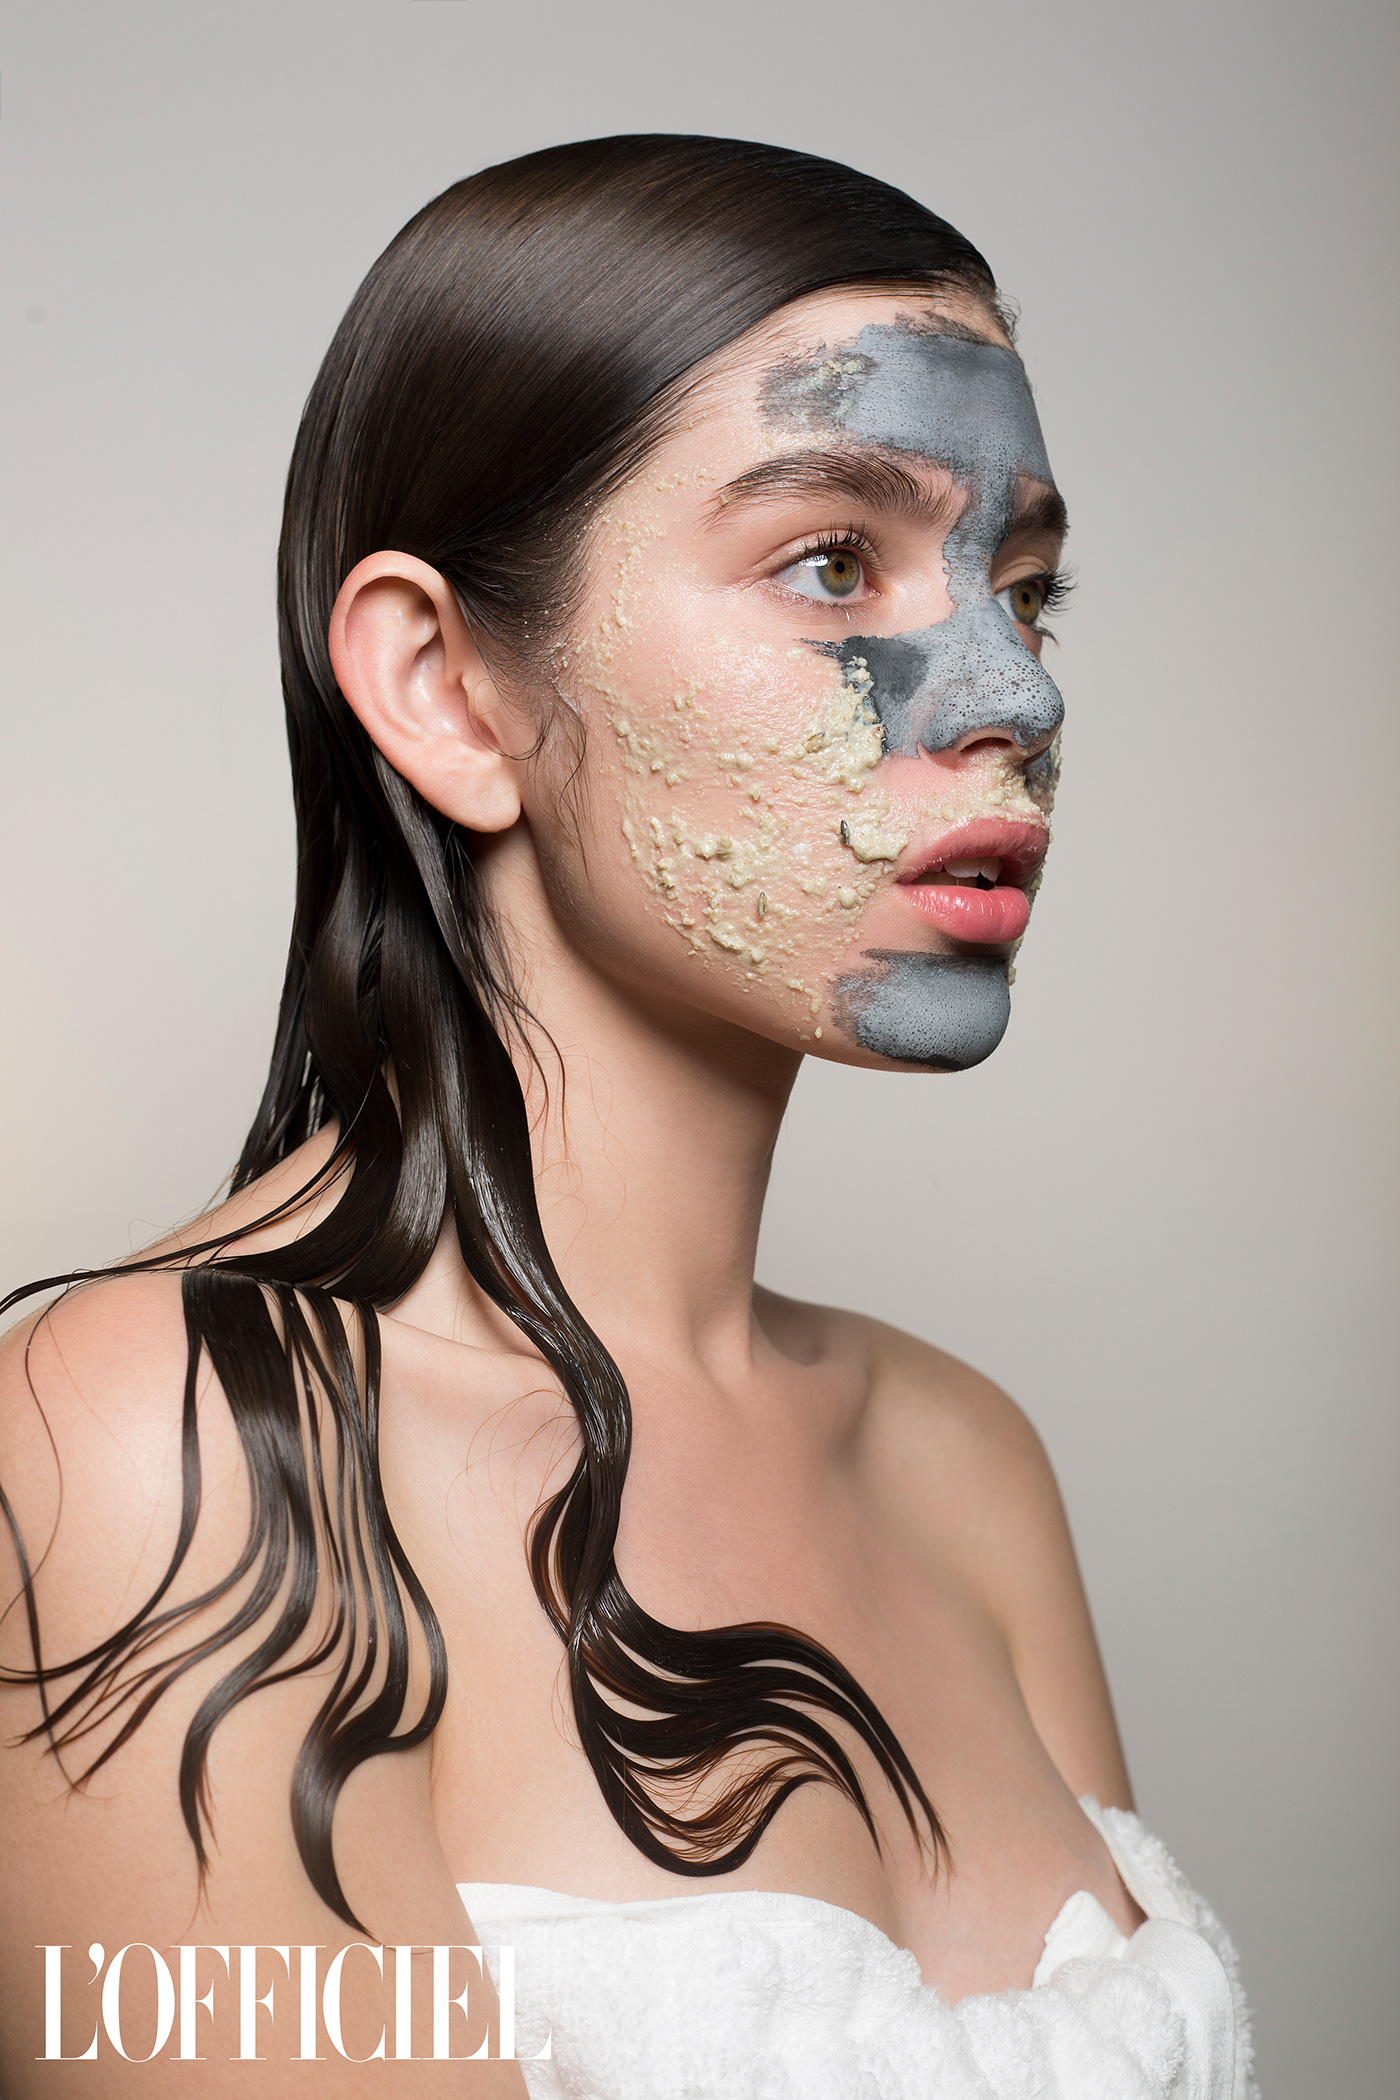 beauty skin clay Lofficiel austria magazine studio art woman Young